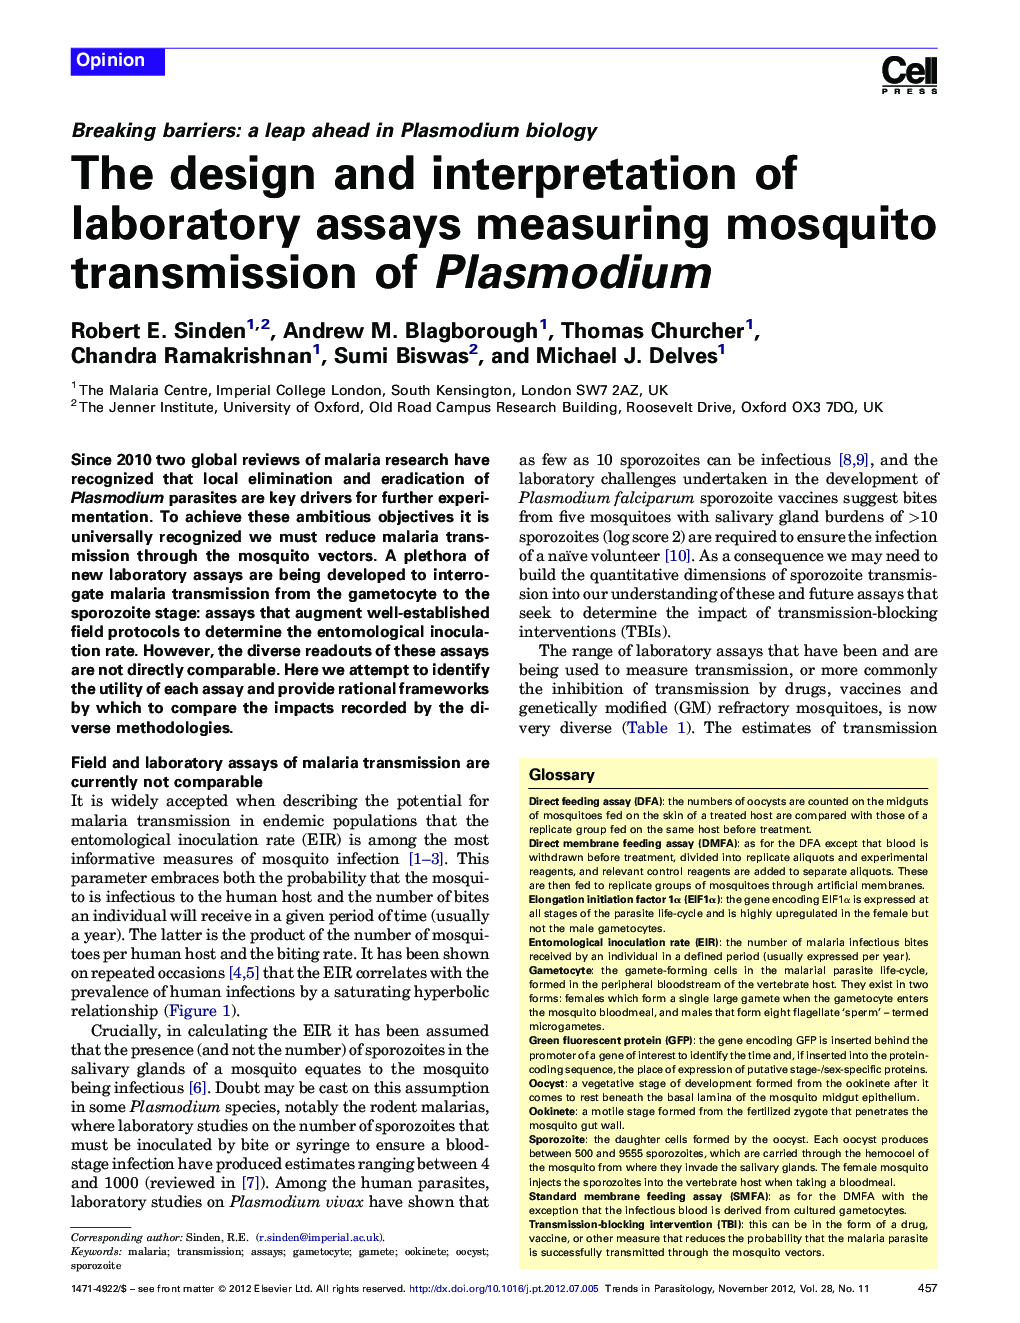 The design and interpretation of laboratory assays measuring mosquito transmission of Plasmodium